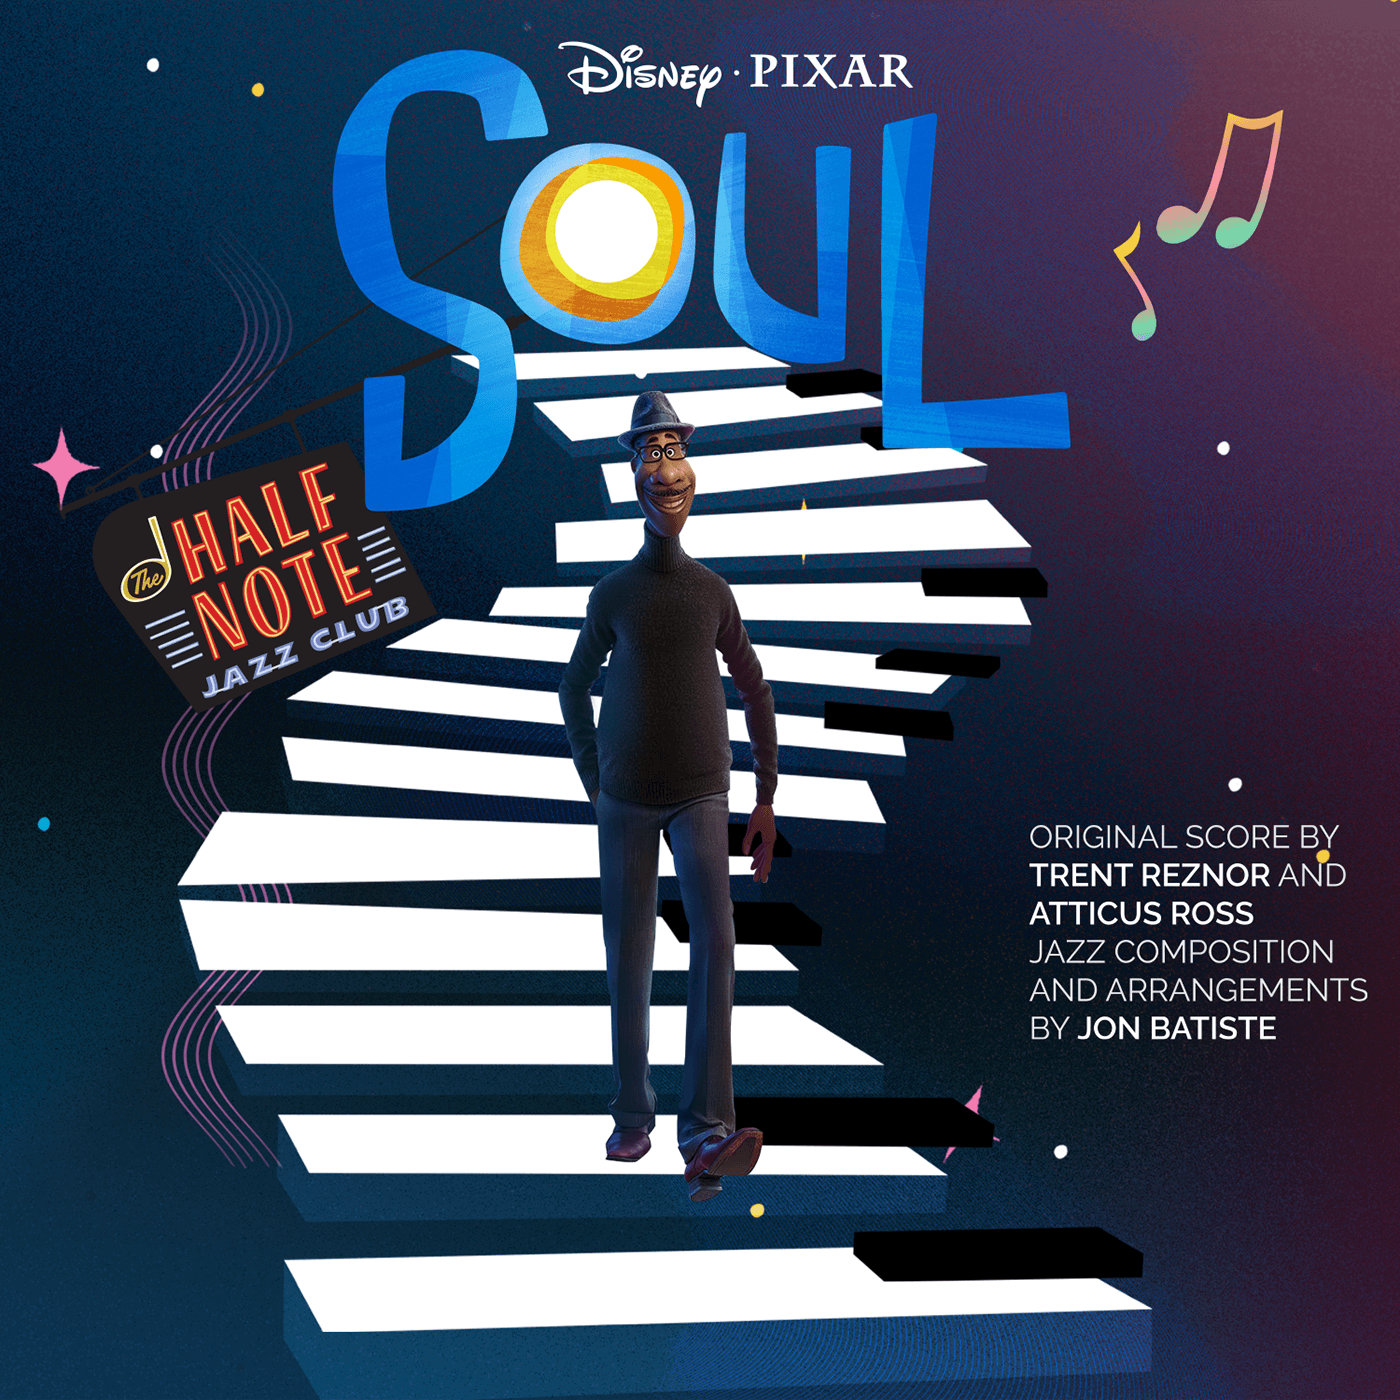 contest soul pixar disney movie soundtrack cover vynil artwork Digital Art 